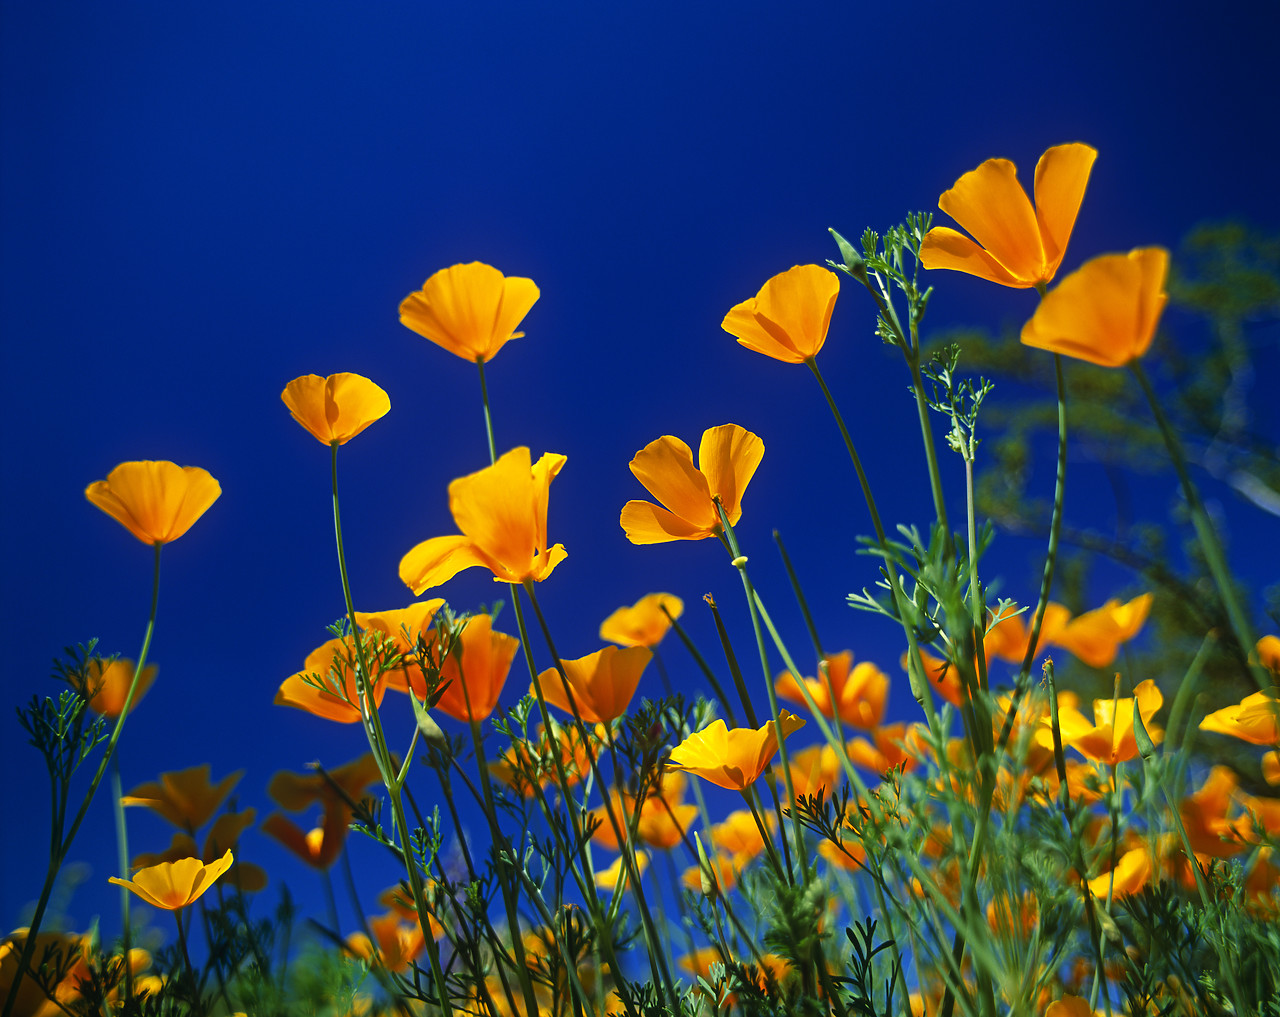 #980610-1 - Mexican Poppies, Picacho Peak State Park, Arizona, USA